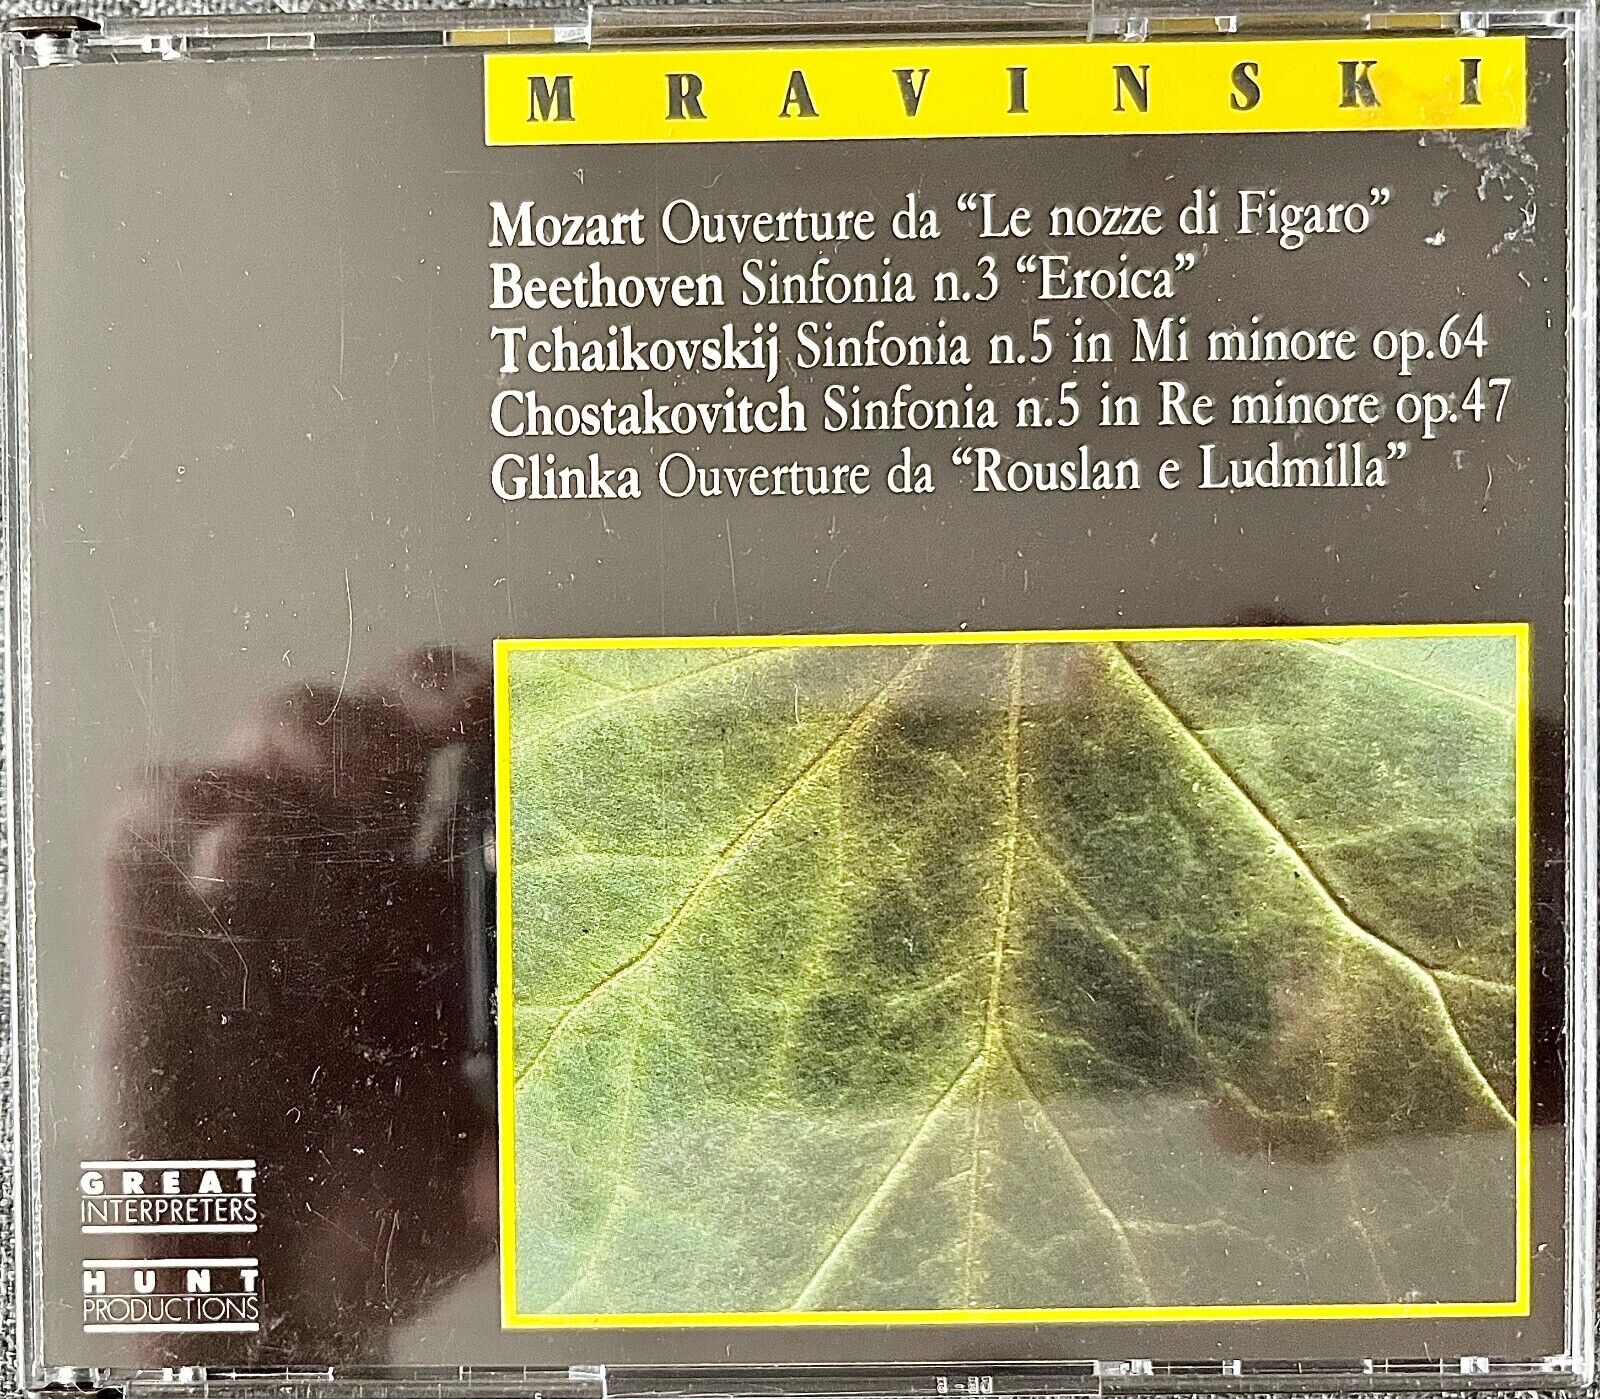 cd Mravinsky conducts Mozart, Beethoven, Tchaikovsky, Shostakovich, like new